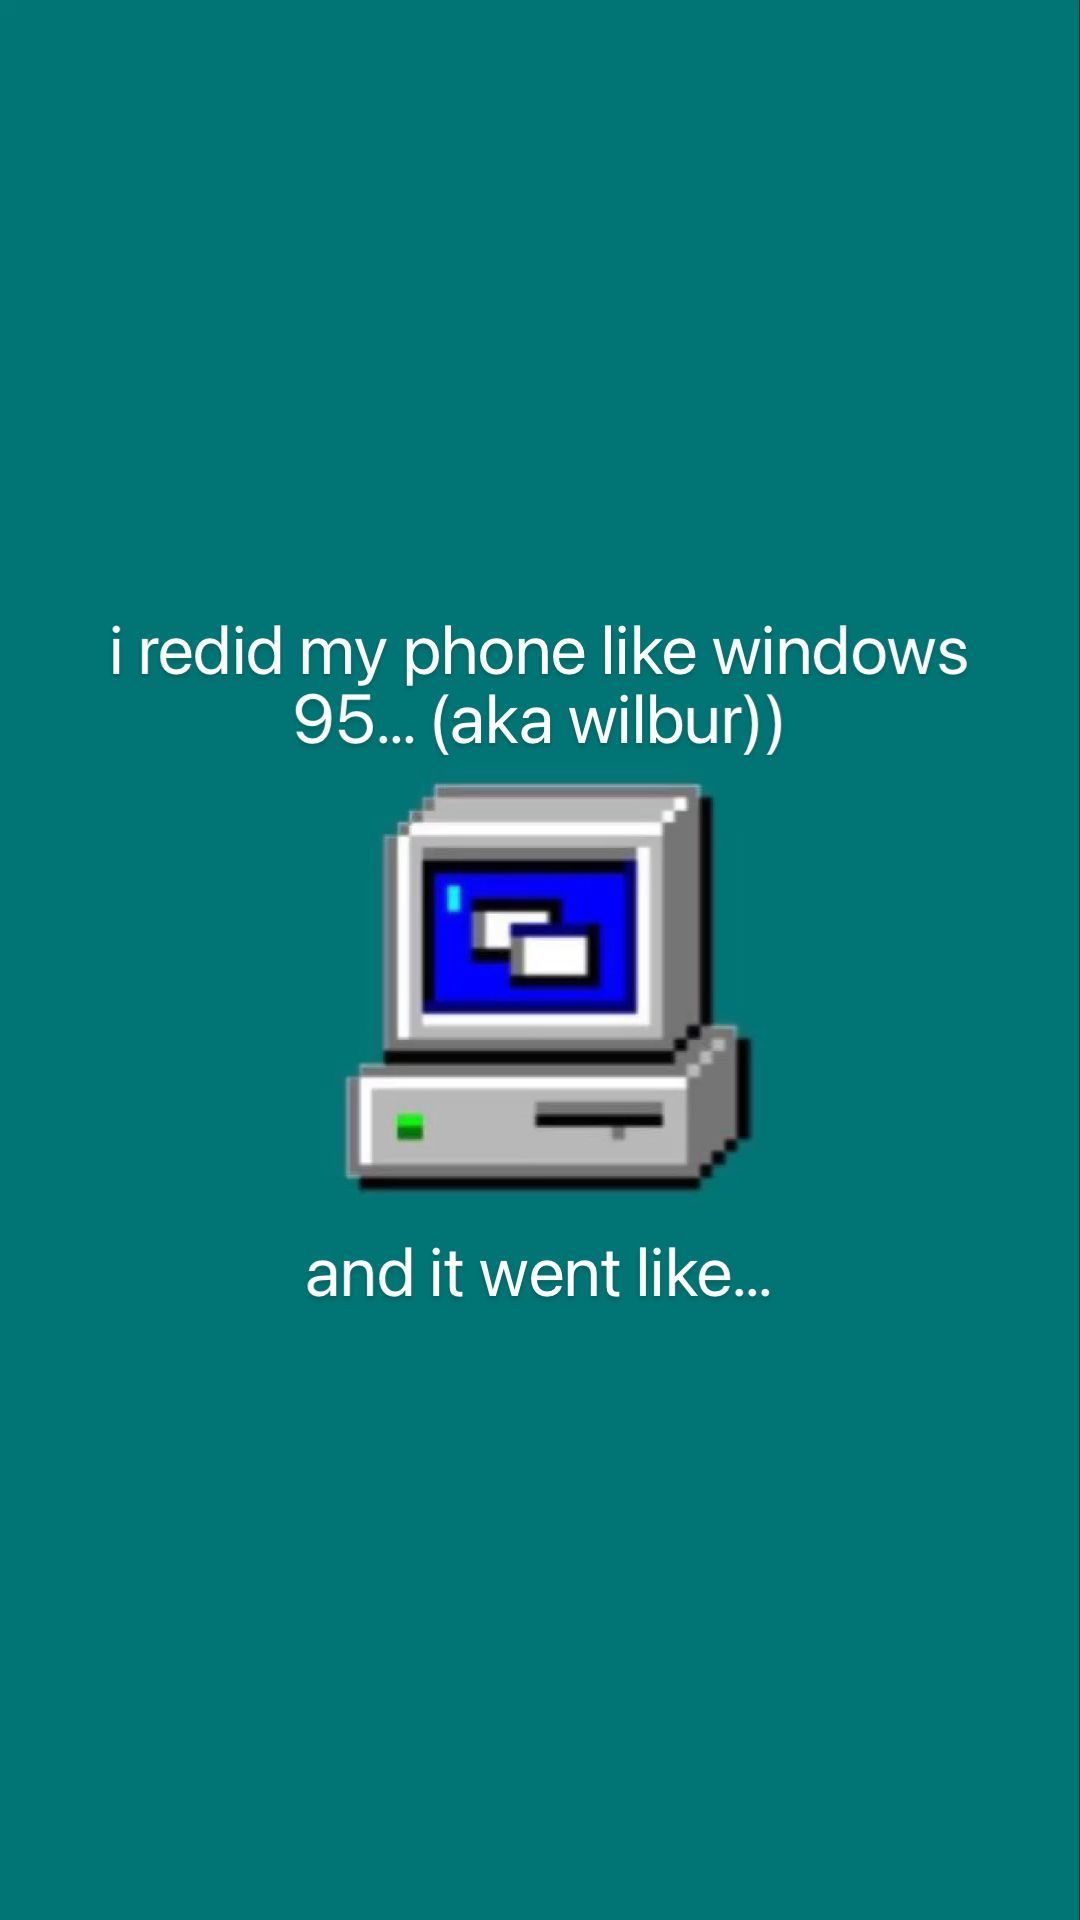 I redid my phone like Windows 95... and it went like... - Windows 95